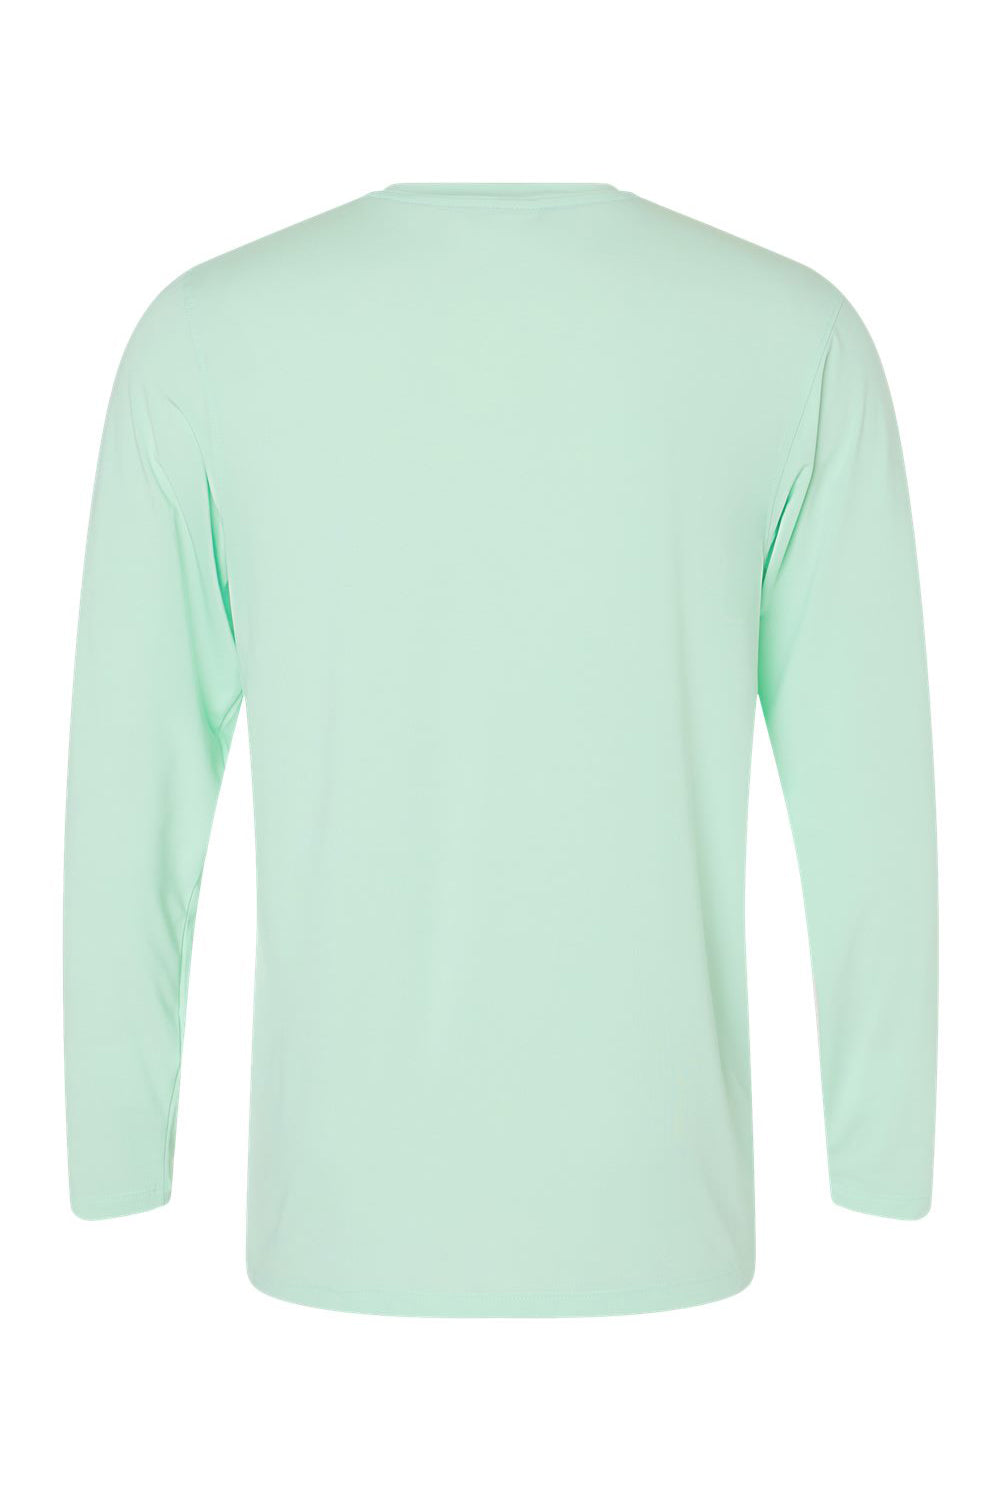 Paragon 222 Mens Aruba Extreme Performance Long Sleeve Crewneck T-Shirt Mint Green Flat Back